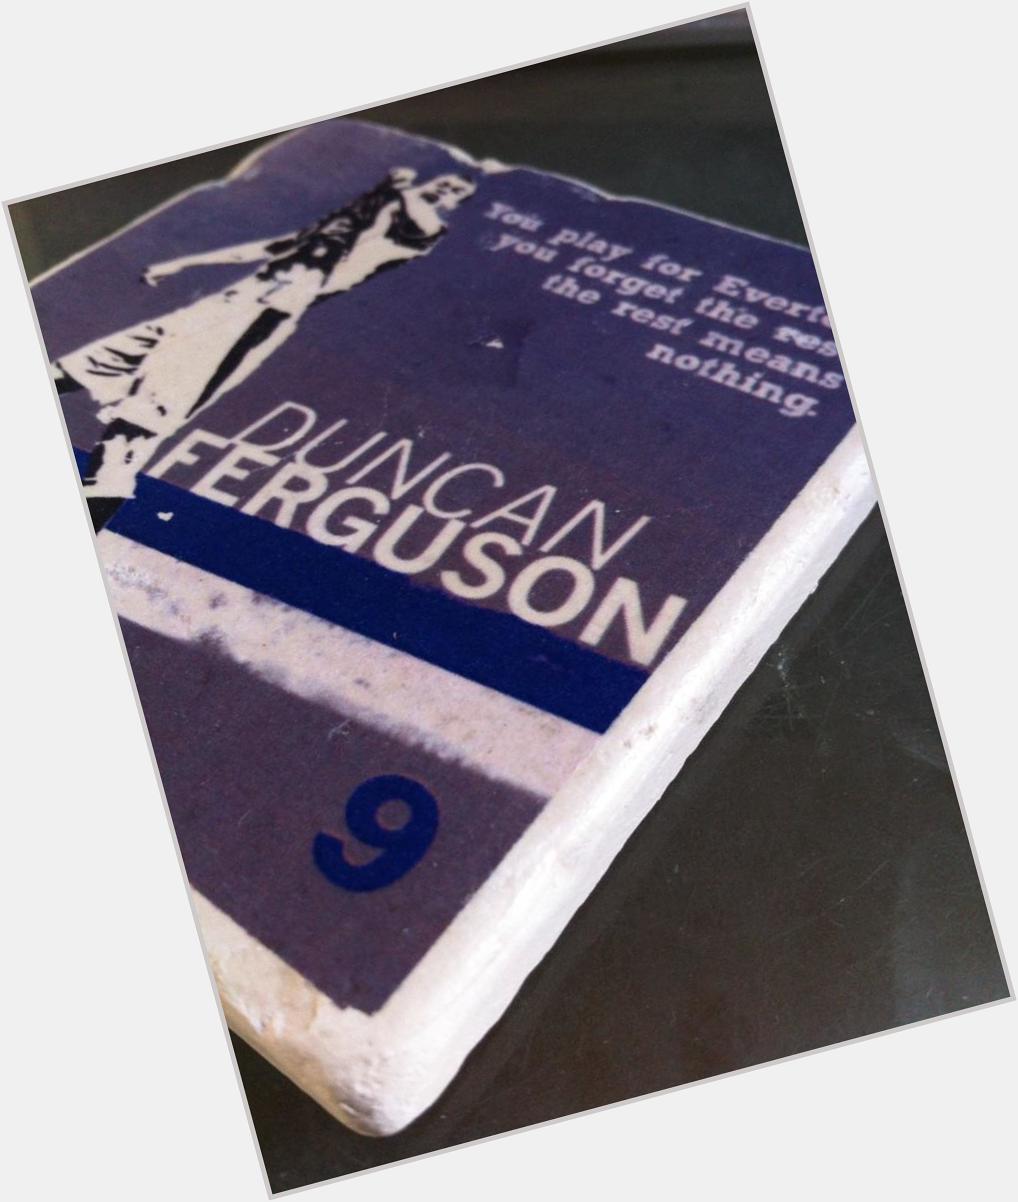 Happy birthday Duncan Ferguson. 